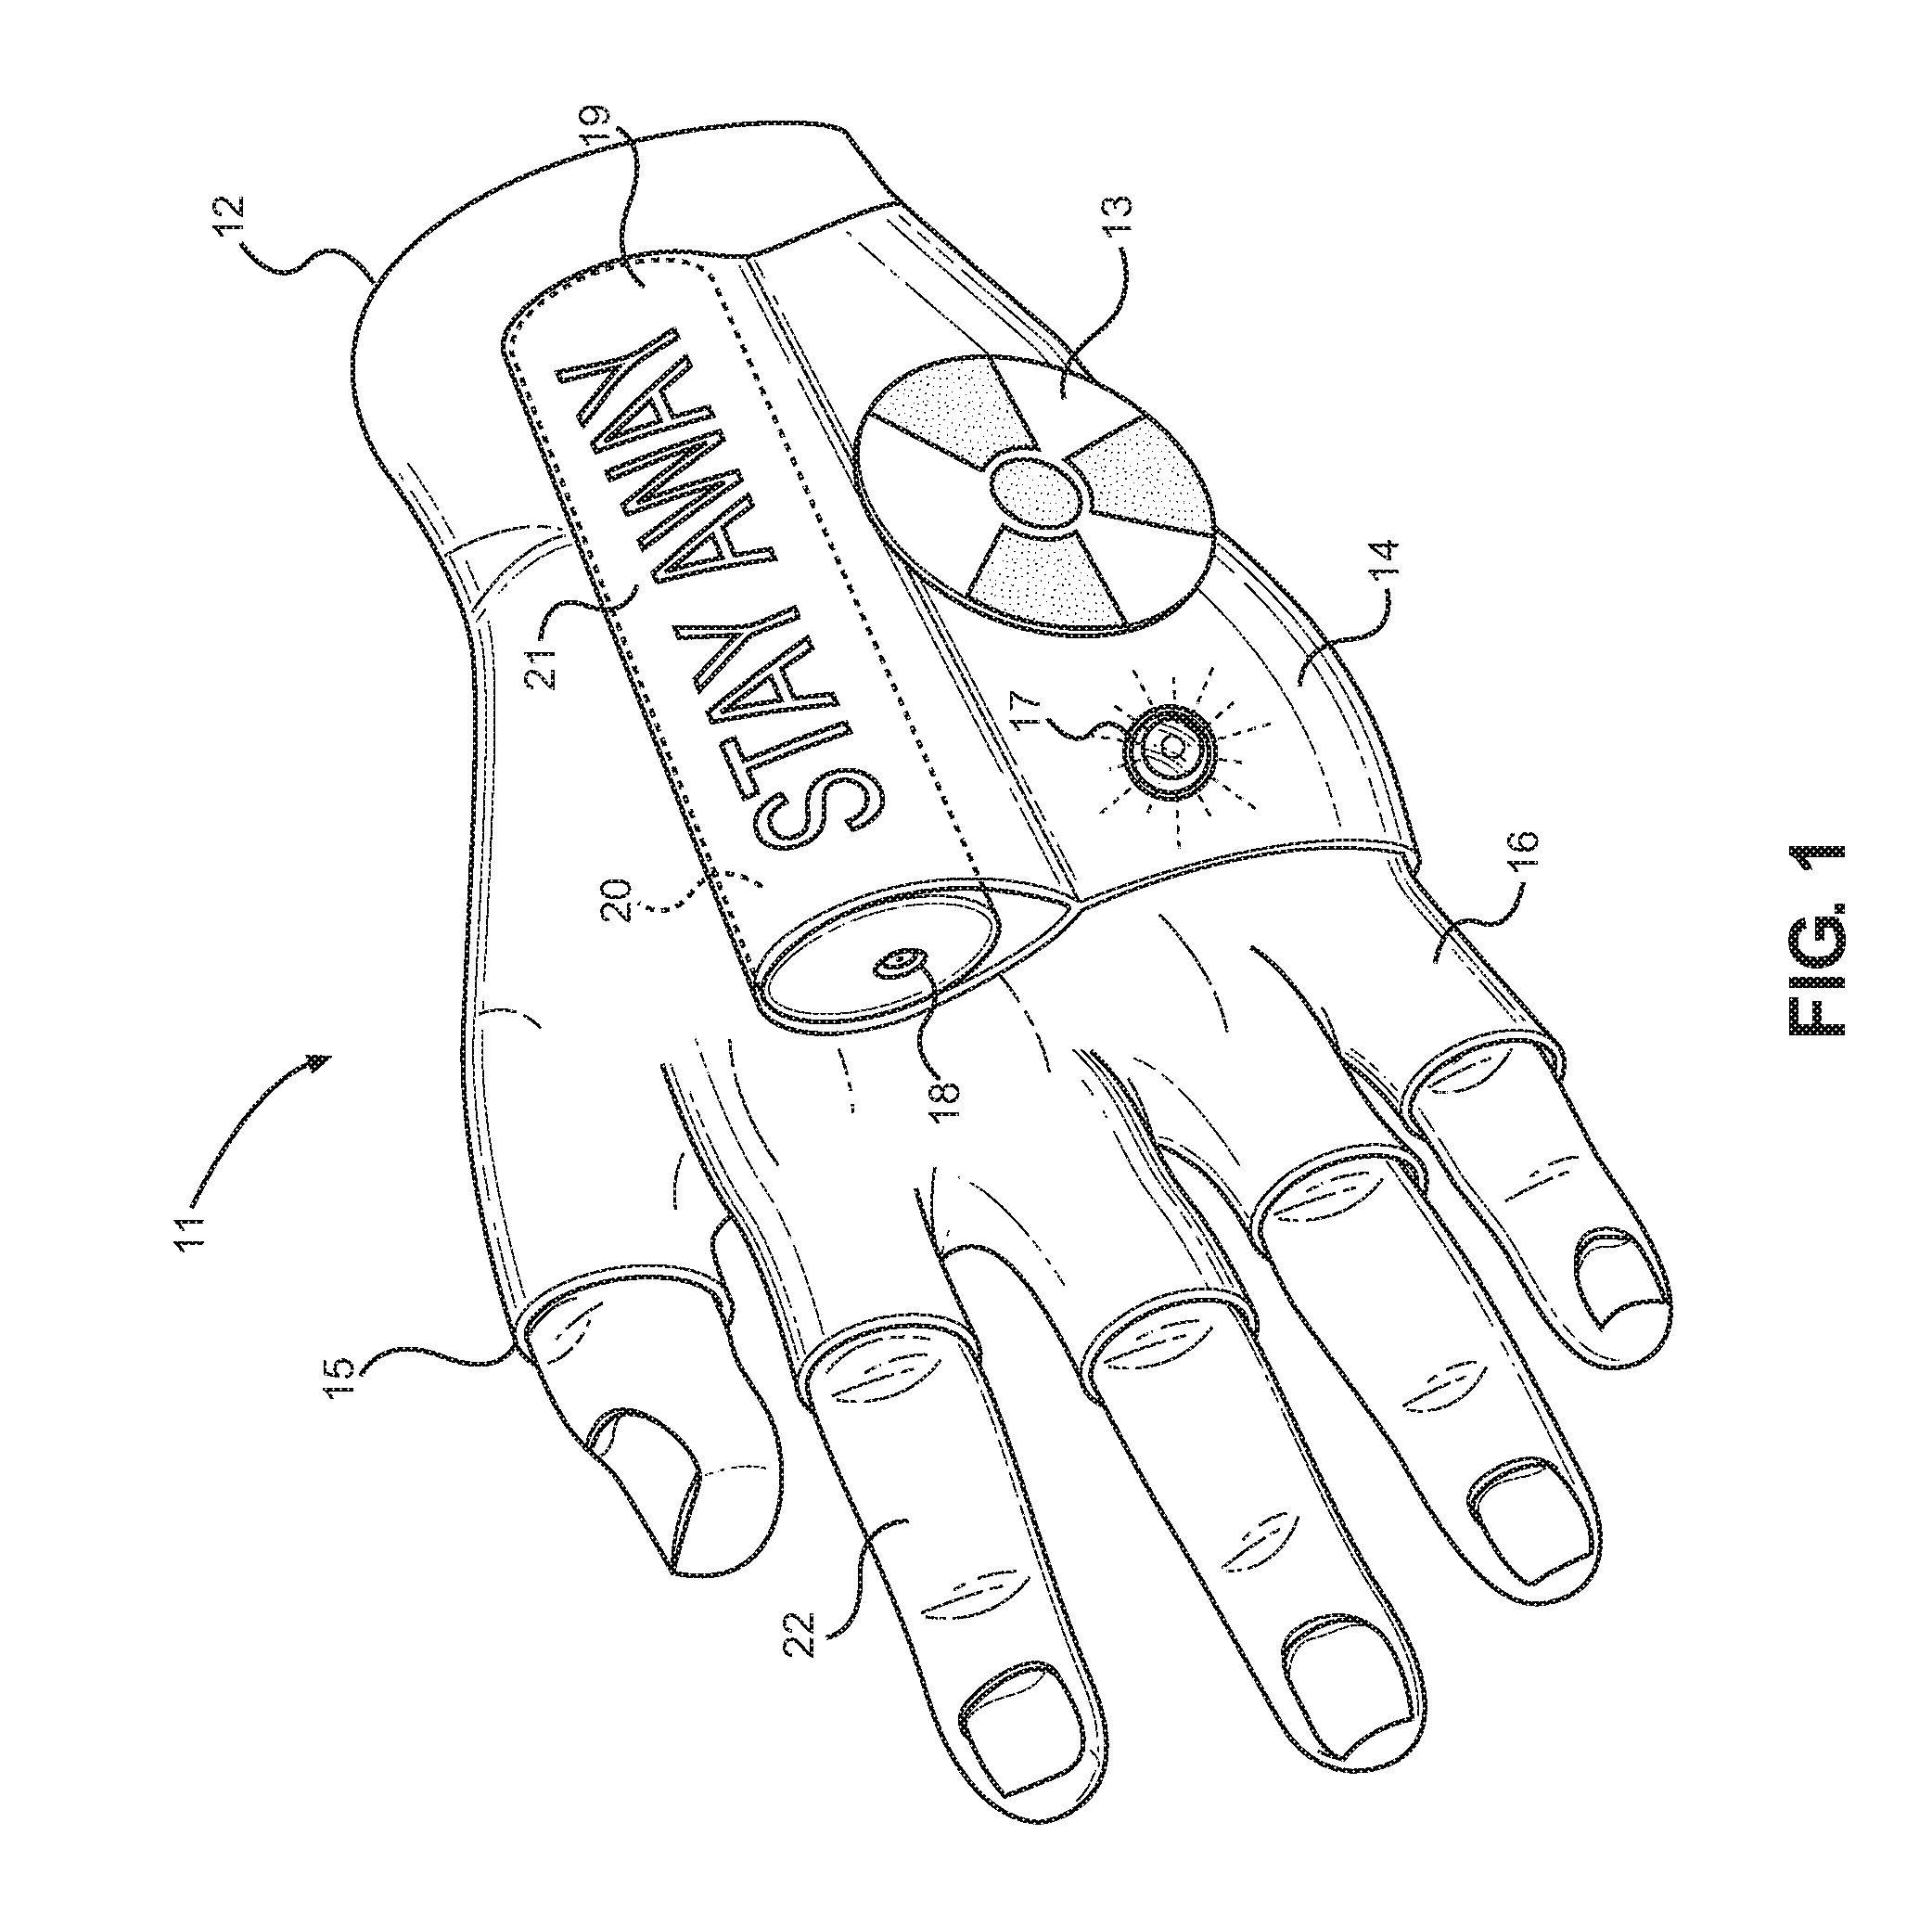 Self-Defense Glove